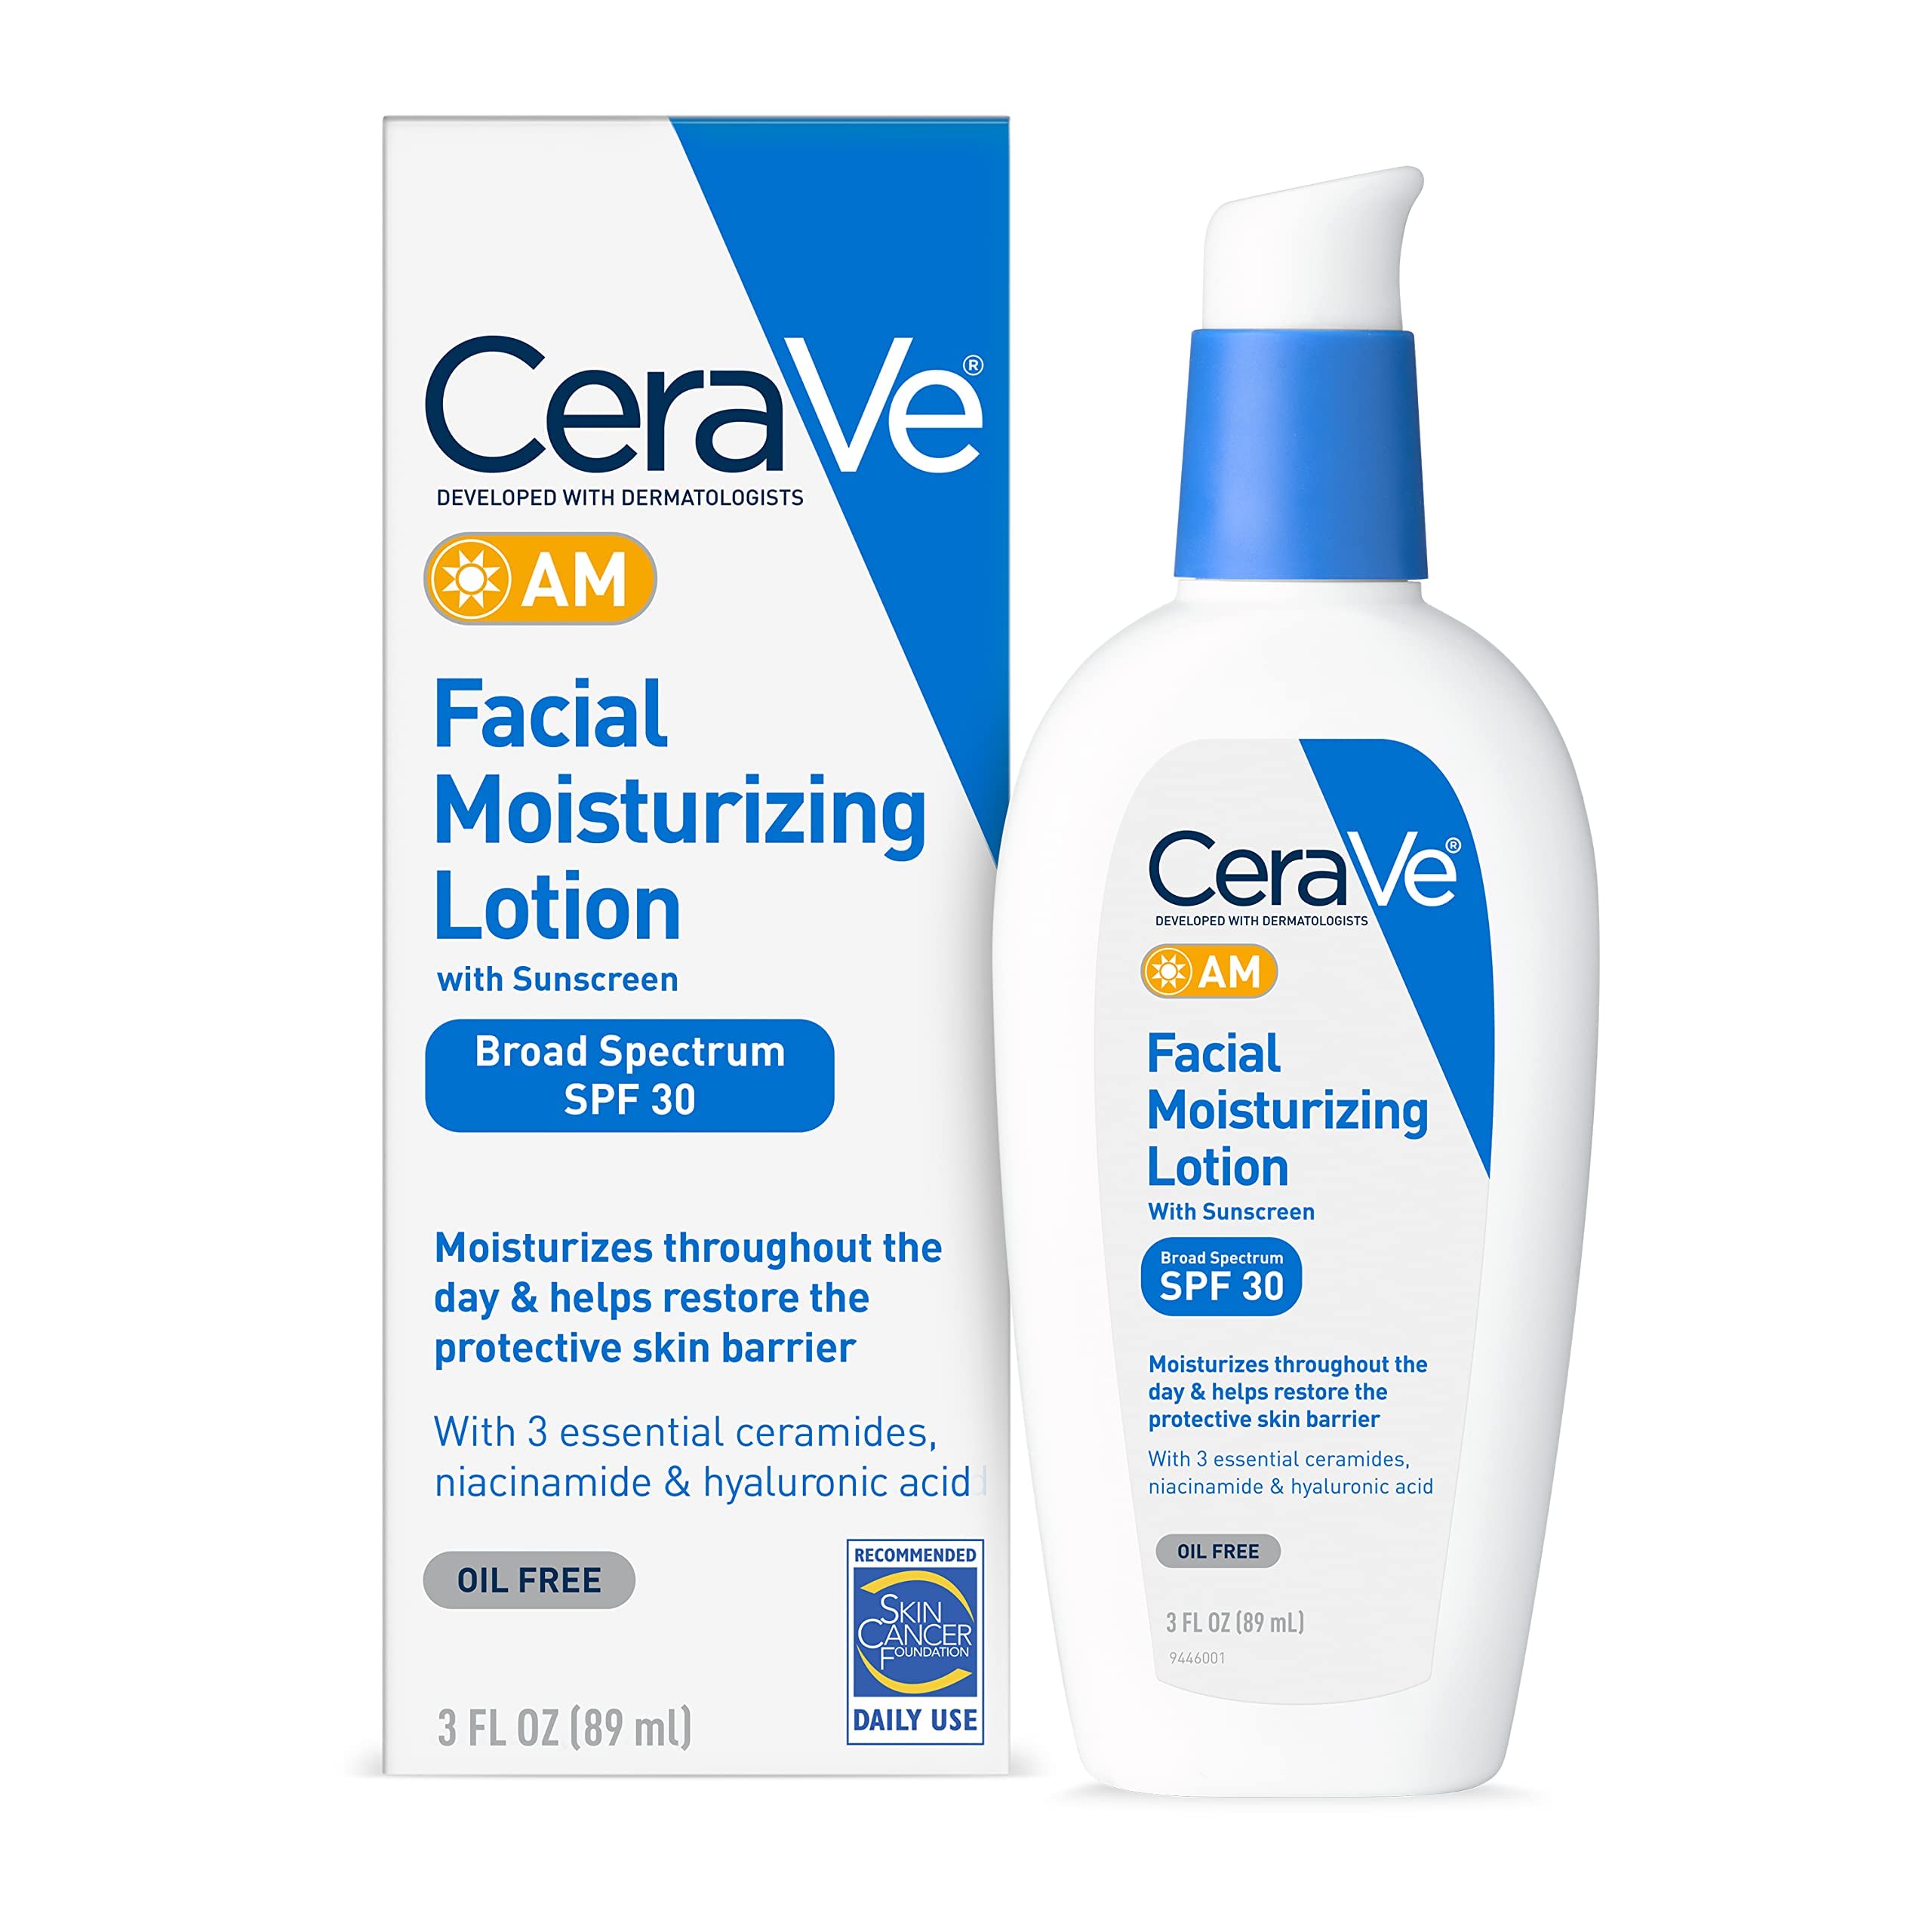 CeraVe (AM) Facial Moisturizing Lotion, 3oz